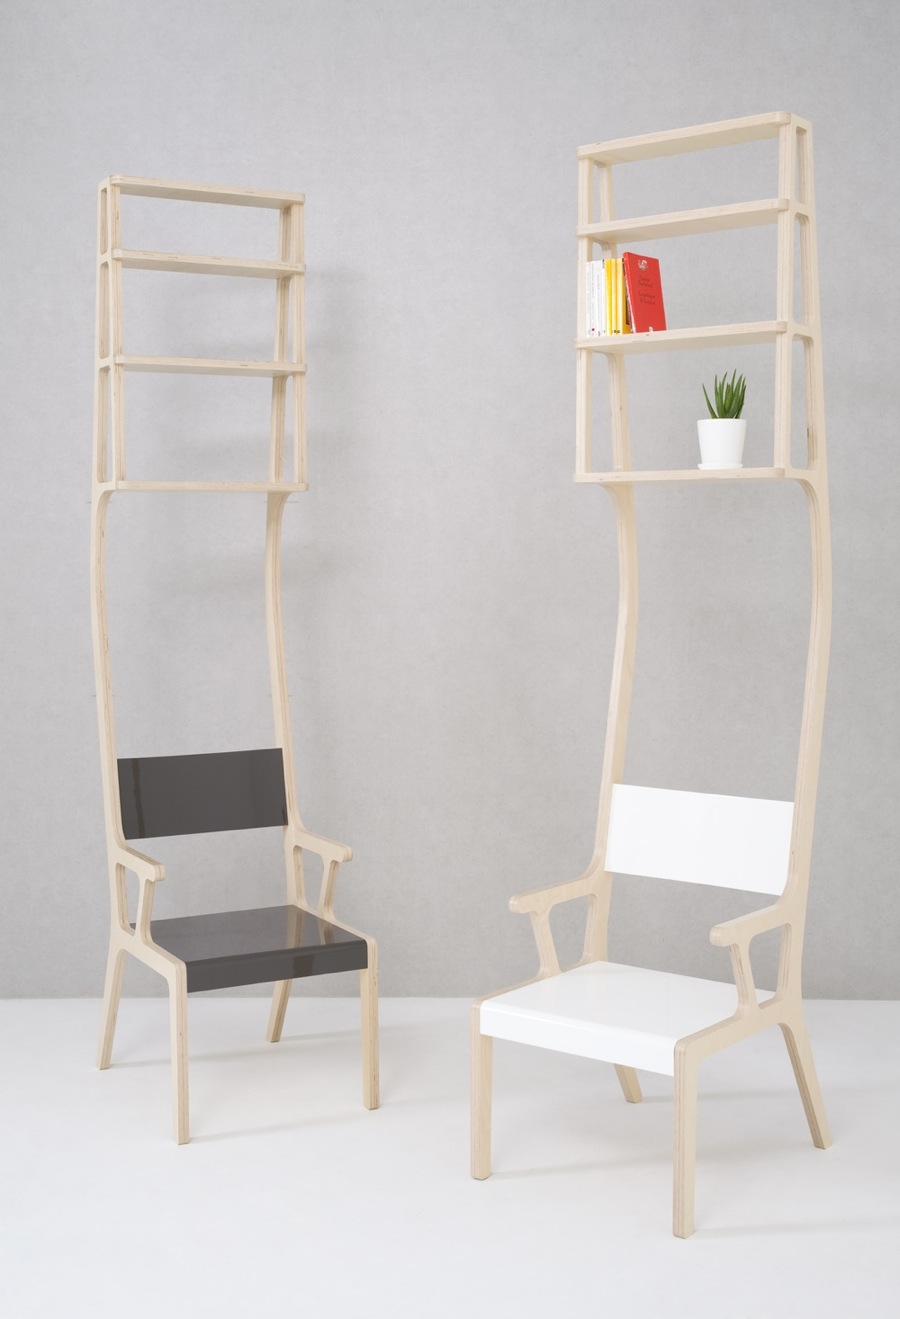 Chairs-Seung-Yong-Song-10.jpg